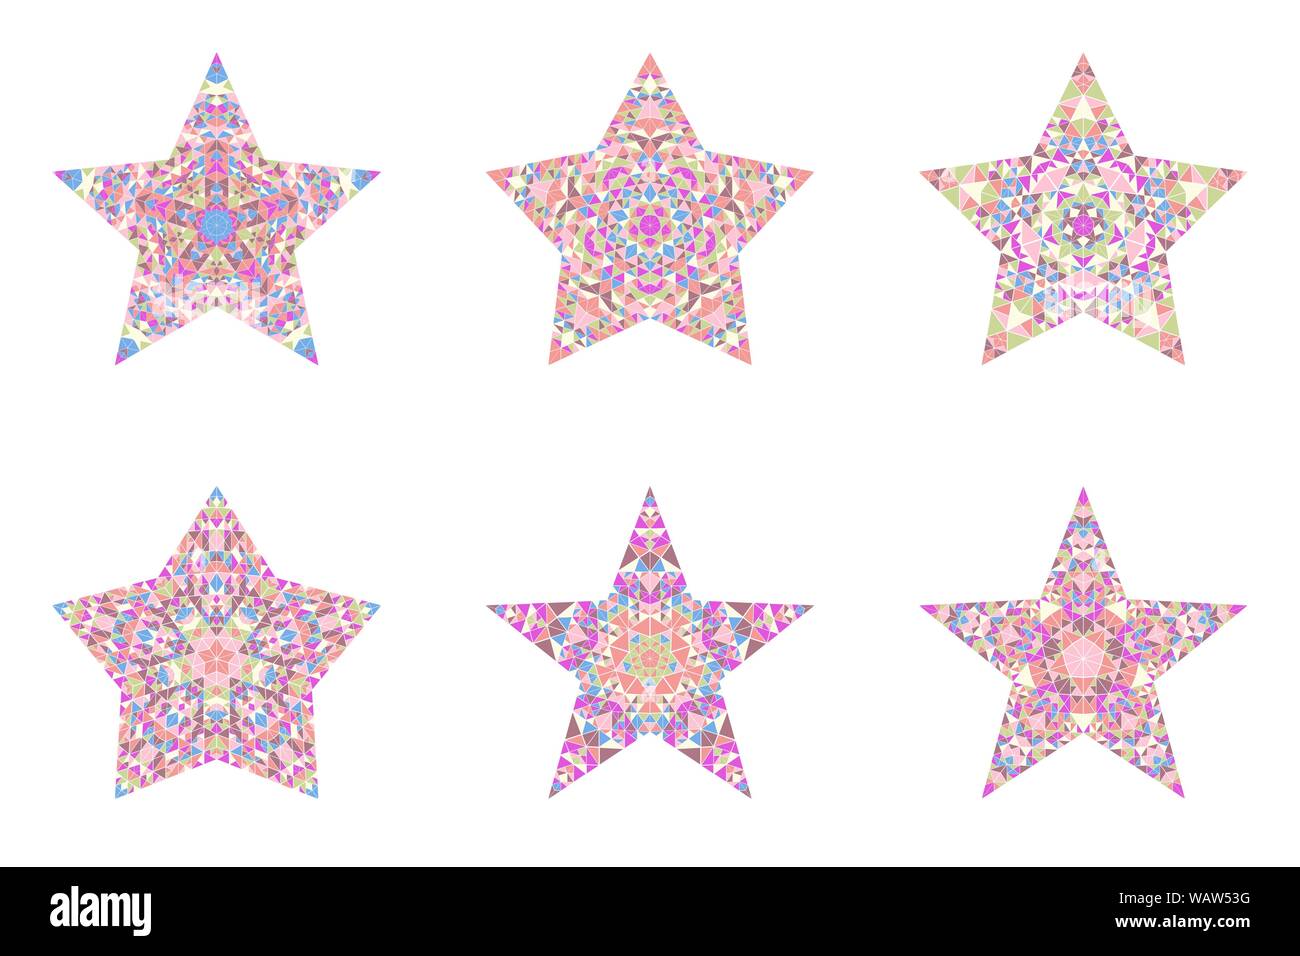 Isolierte Dreieck Stern Kollektion - polygonale Geometrische geometrische Ornamente vector Designs elementss mit Mosaik Dreiecke Stock Vektor